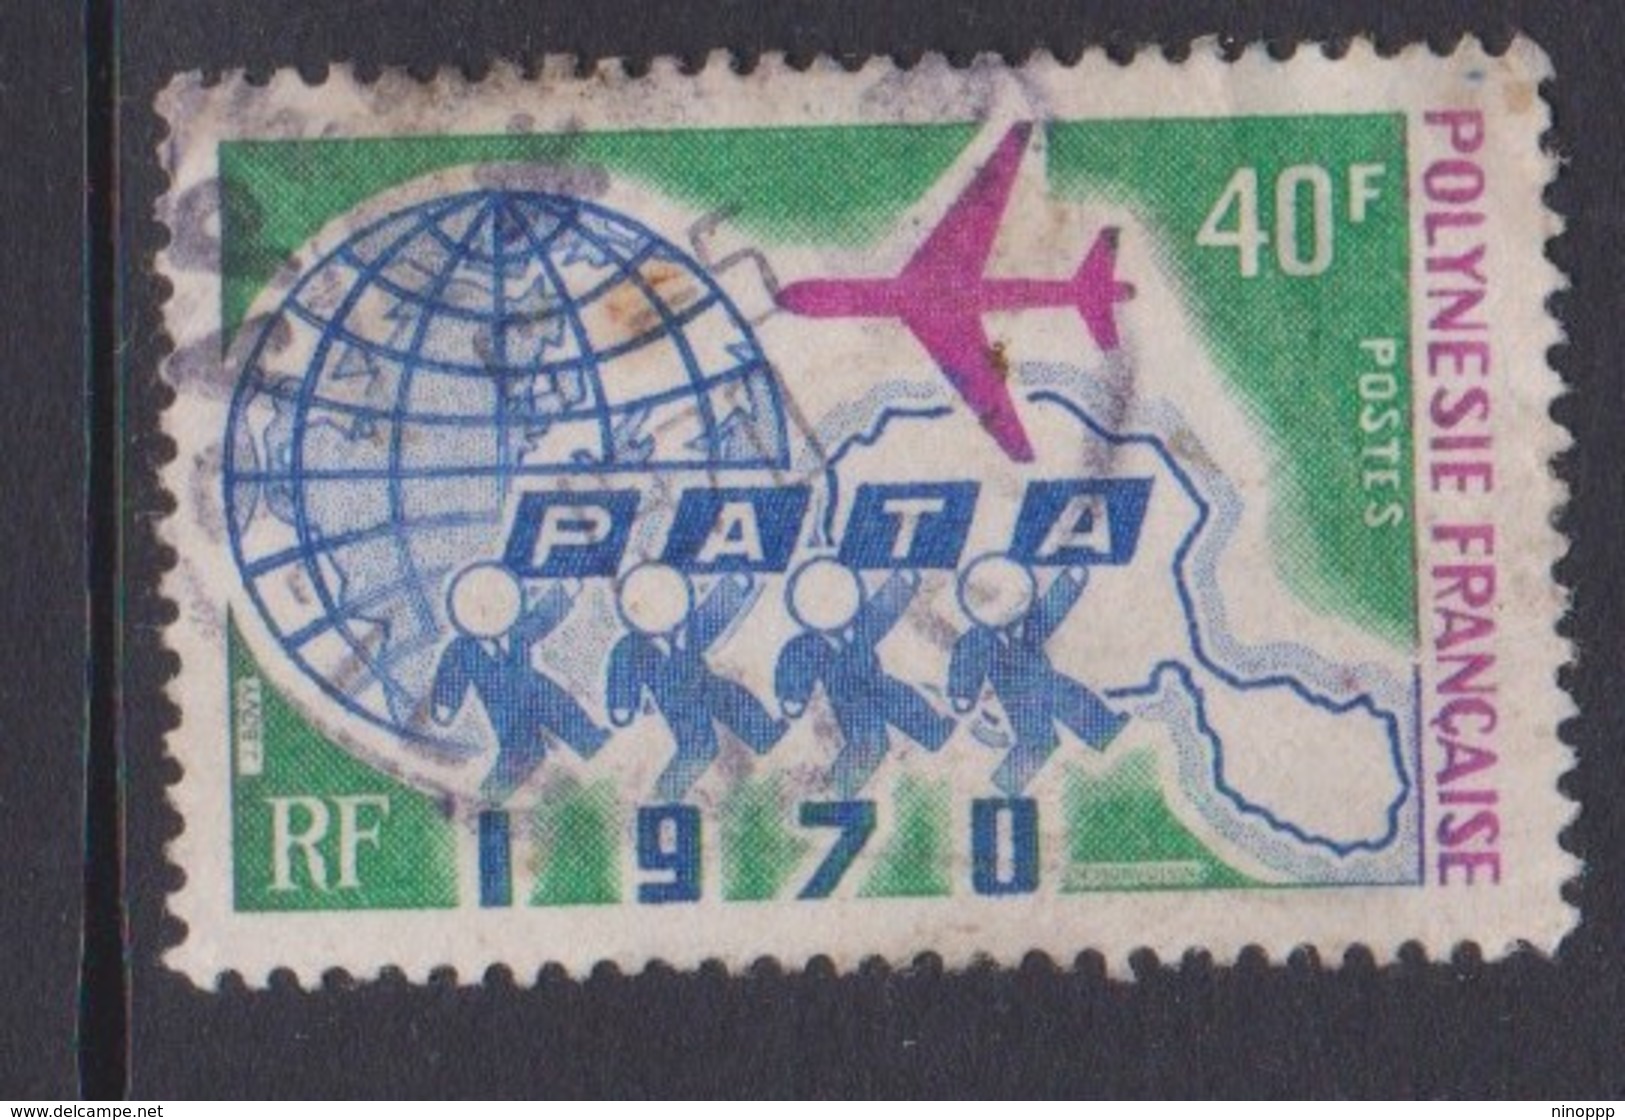 French Polynesia SC 259 1970 Pata Congress, 40f Globe, Plane,map, Used, Toned - Avions